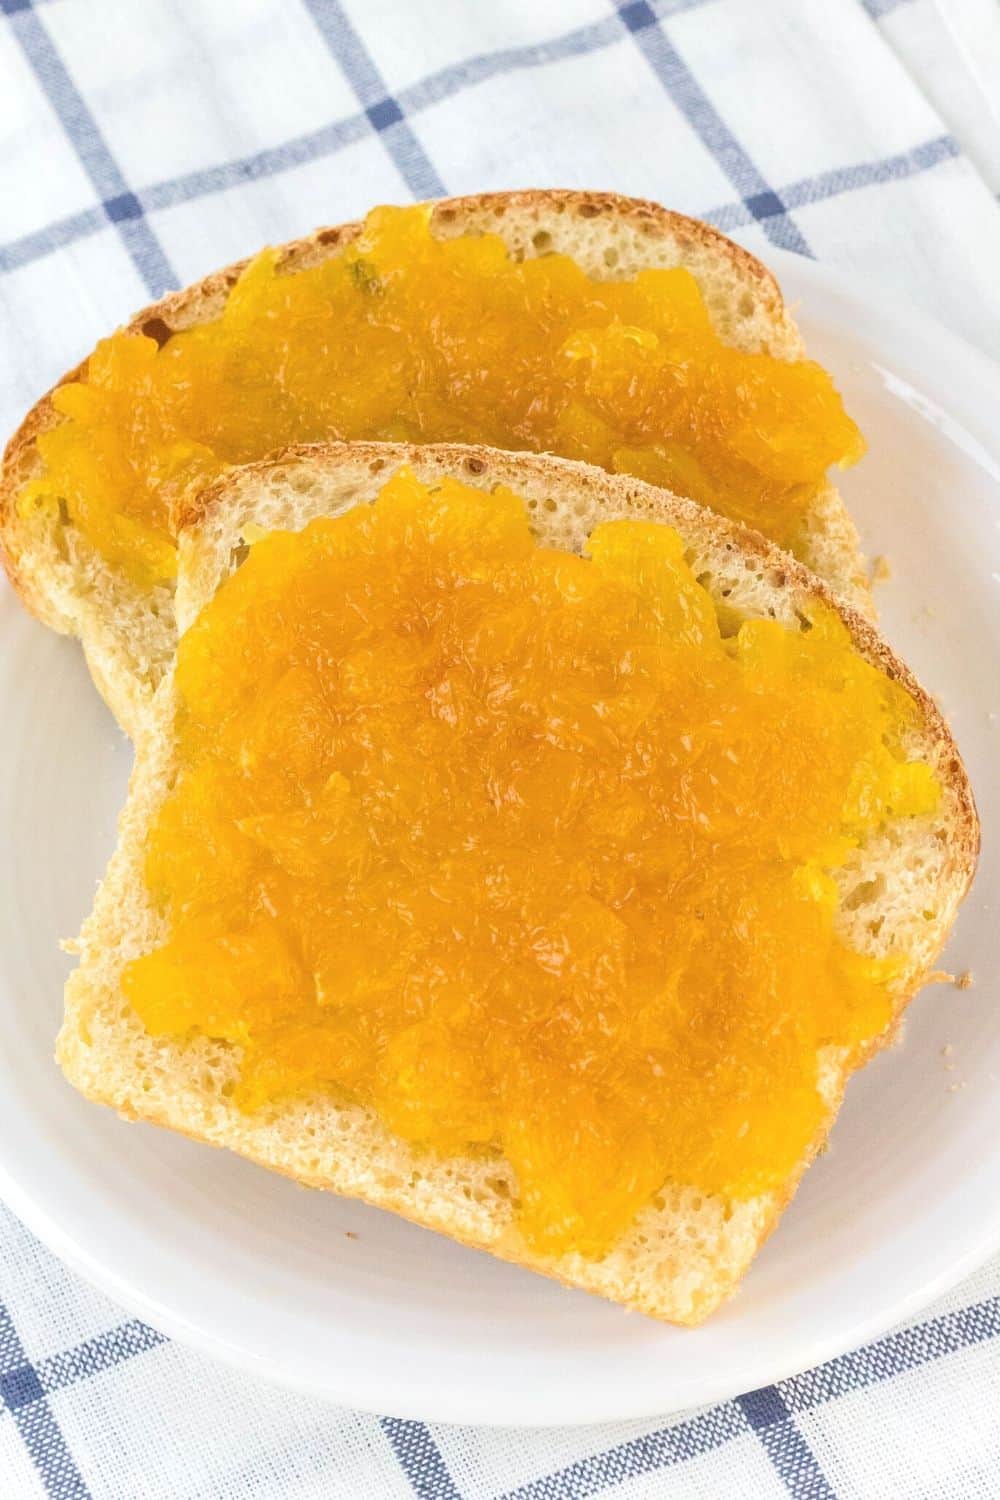 instant pot pineapple jam spread on homemade bread